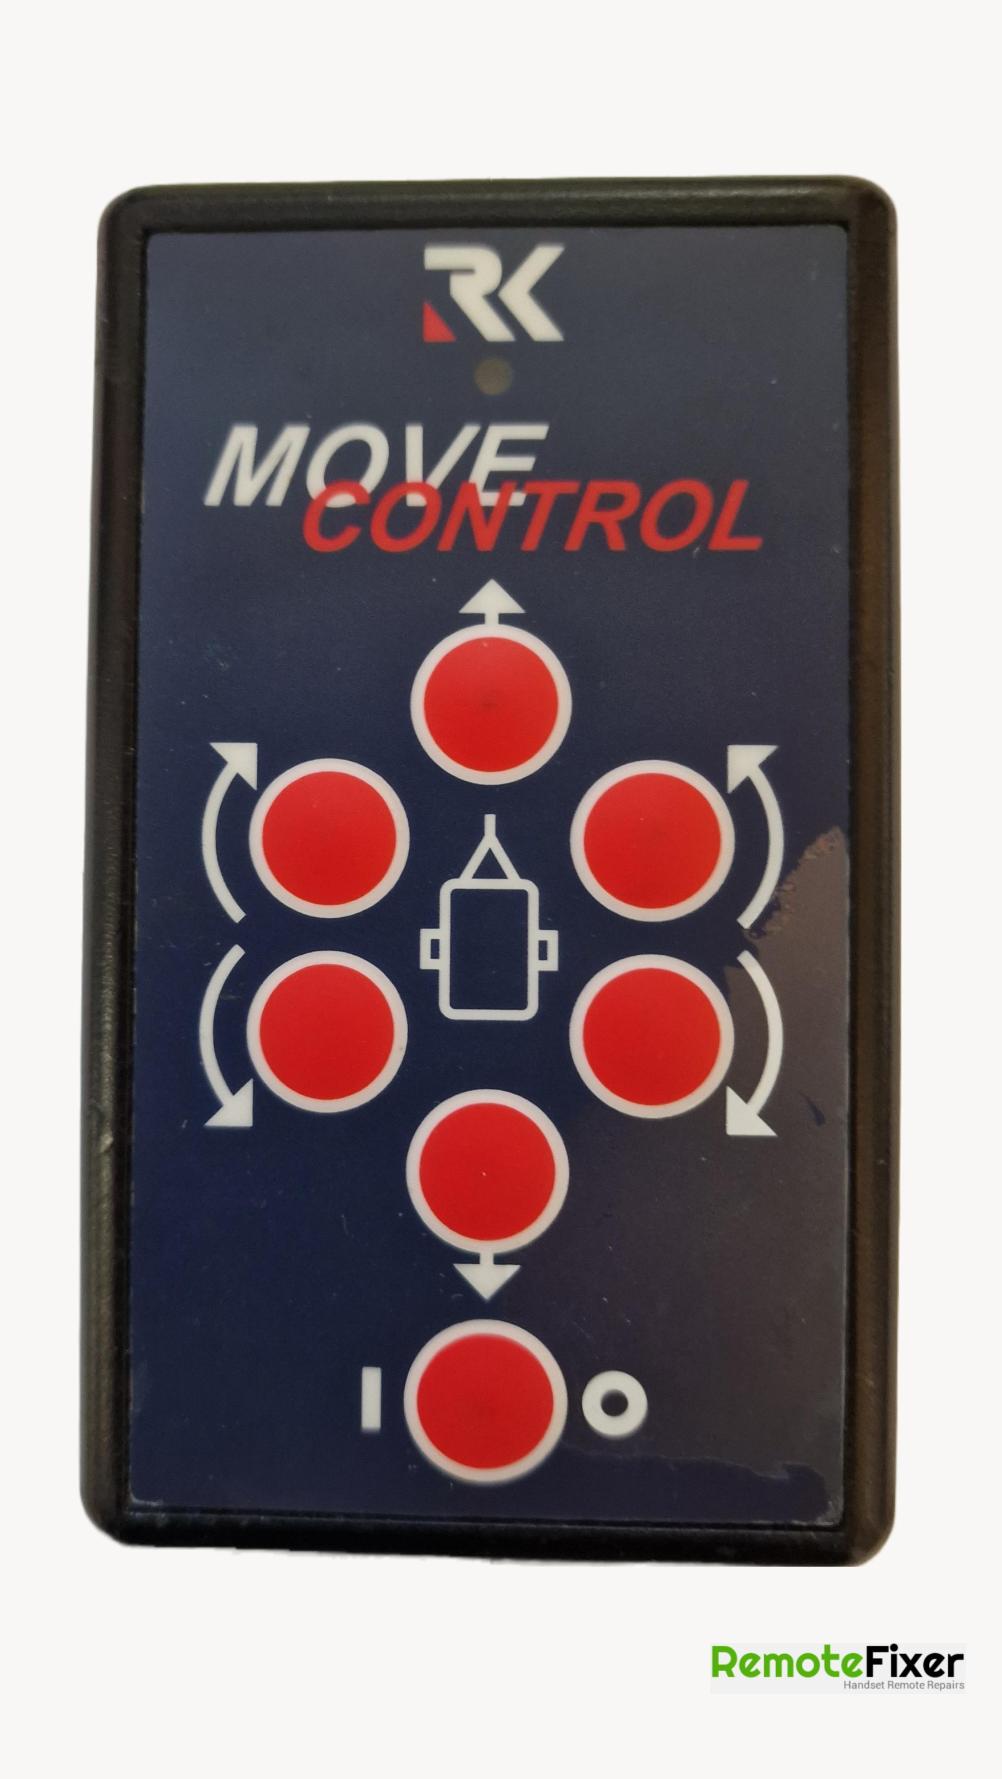 RK move control 527-0521 Remote Control - Front Image